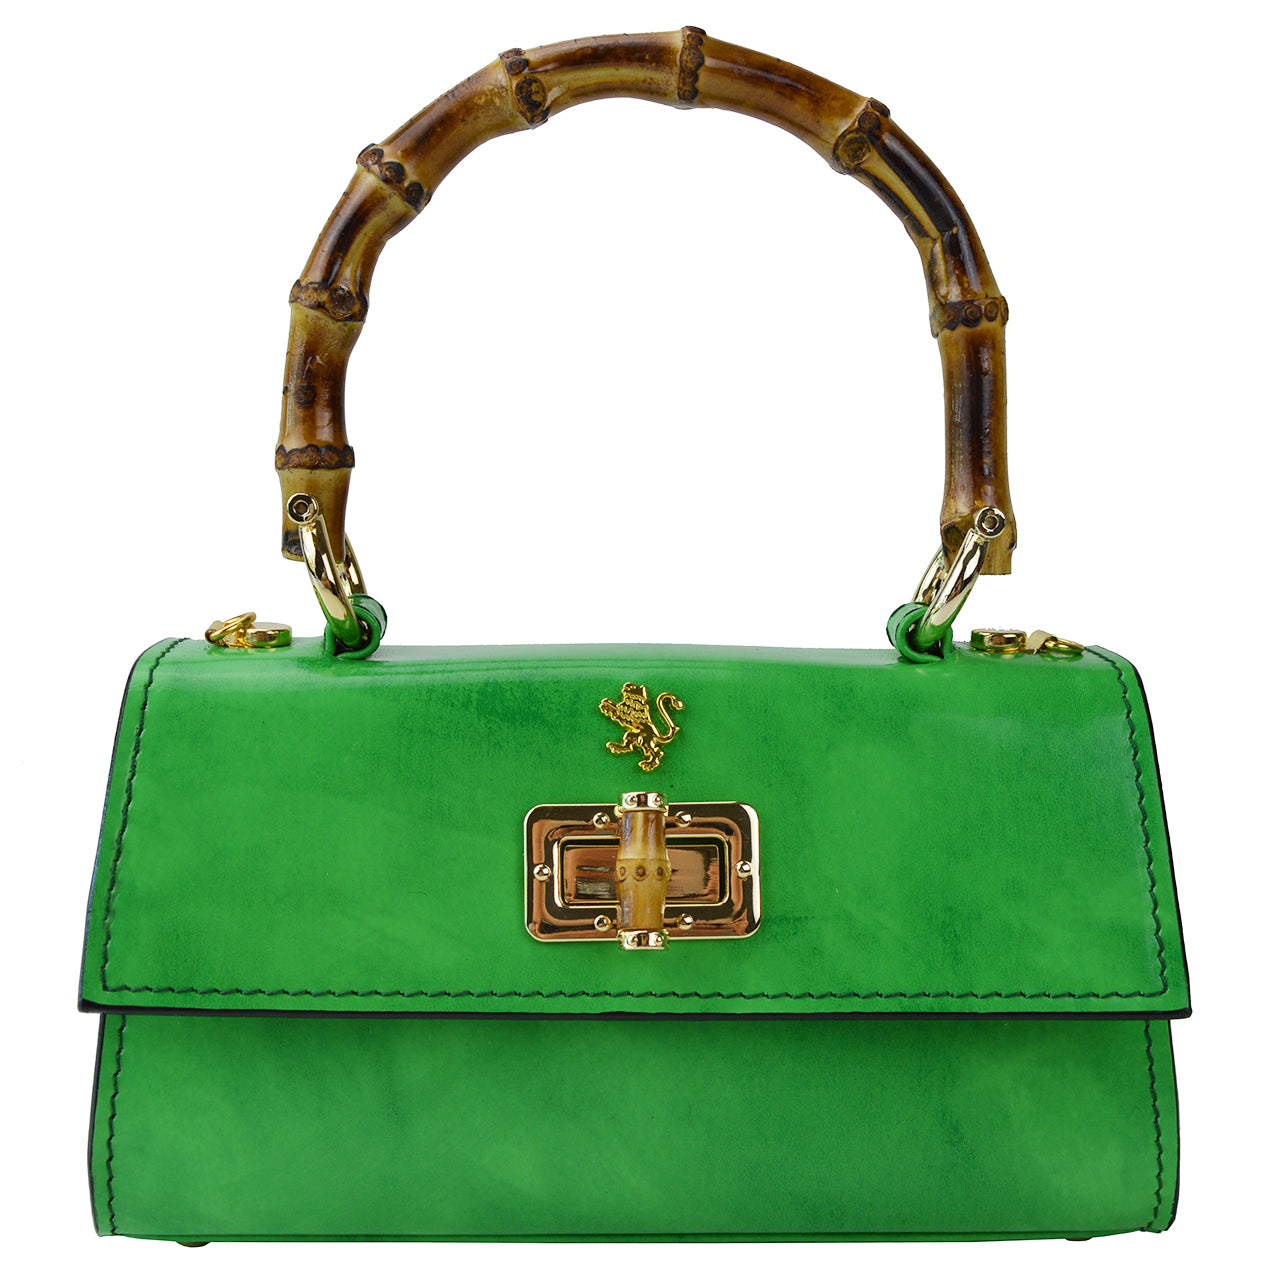 Pratesi Castalia Lady Bag in genuine Italian leather - Castalia Emerald